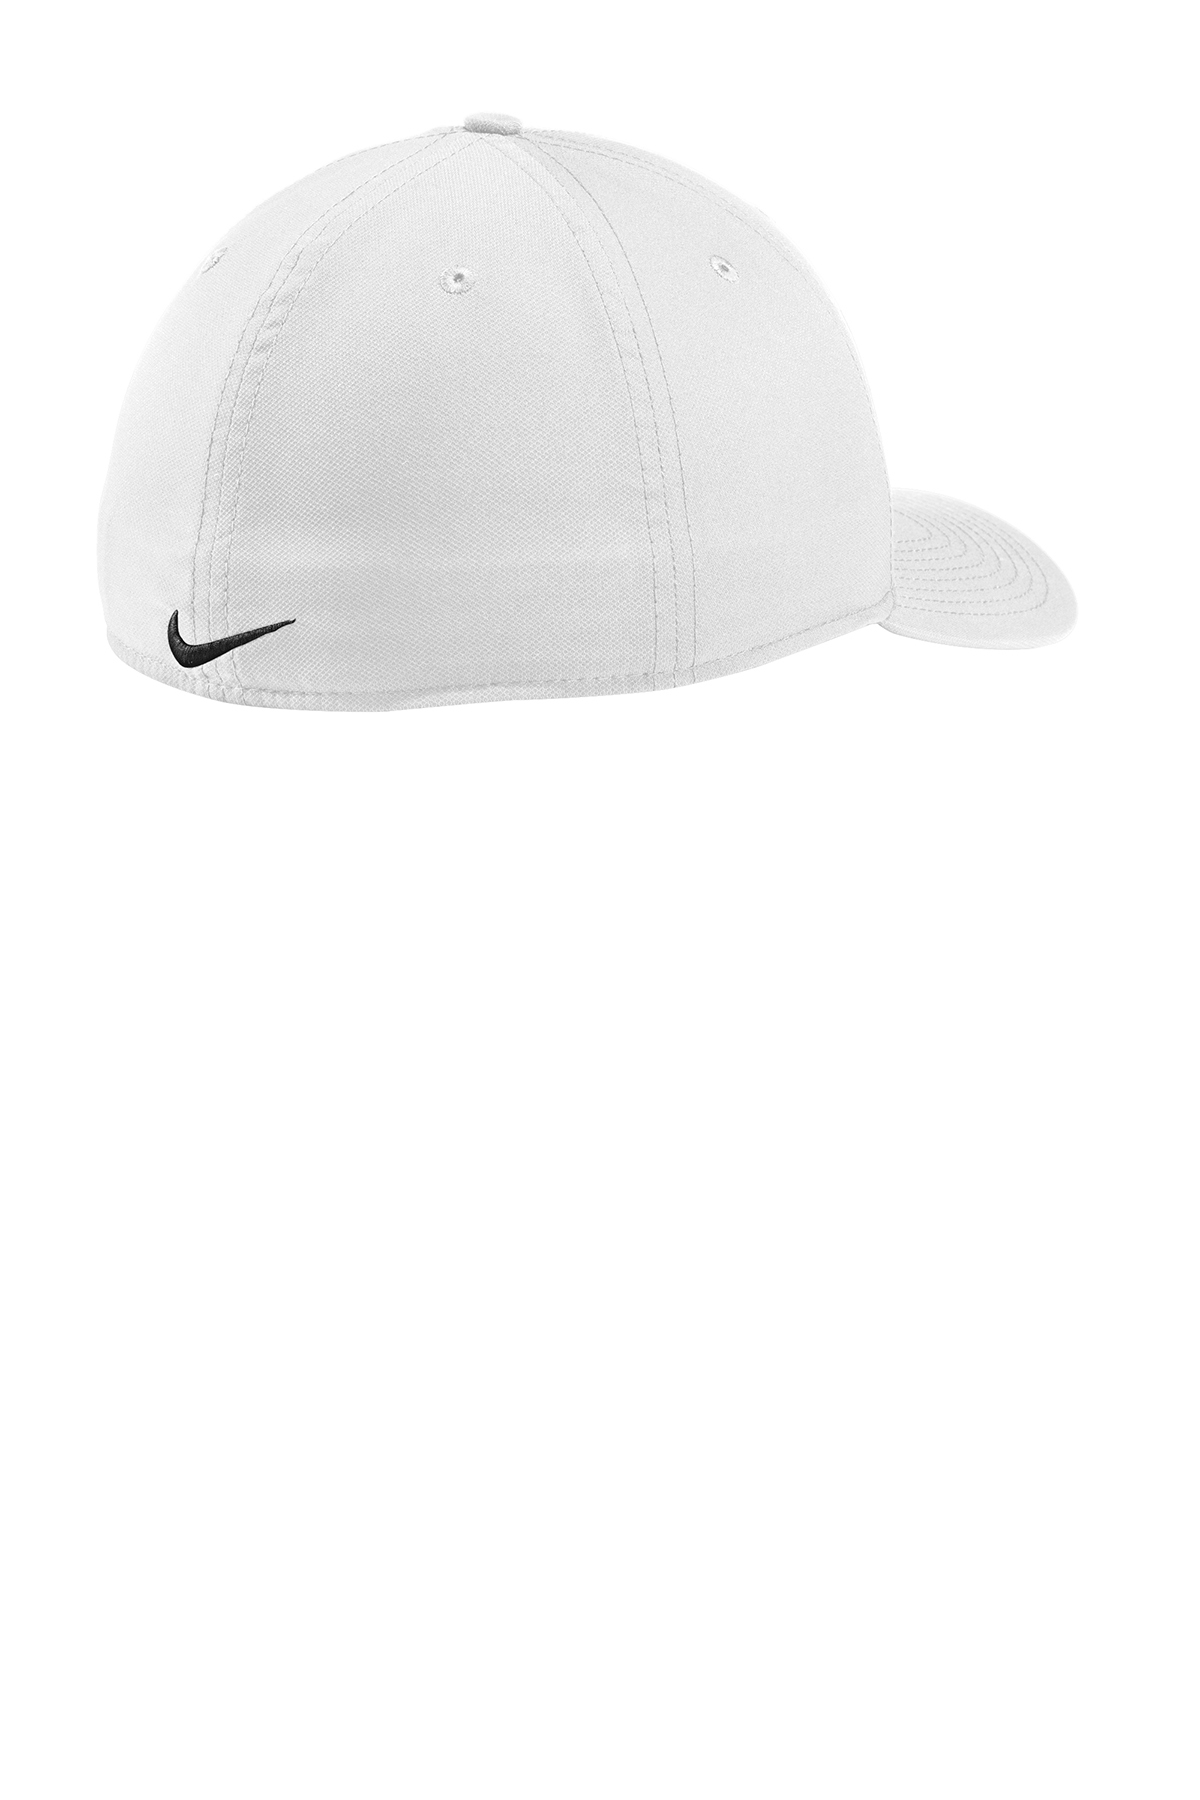 Nike Dri-FIT Classic 99 Cap | Product | SanMar